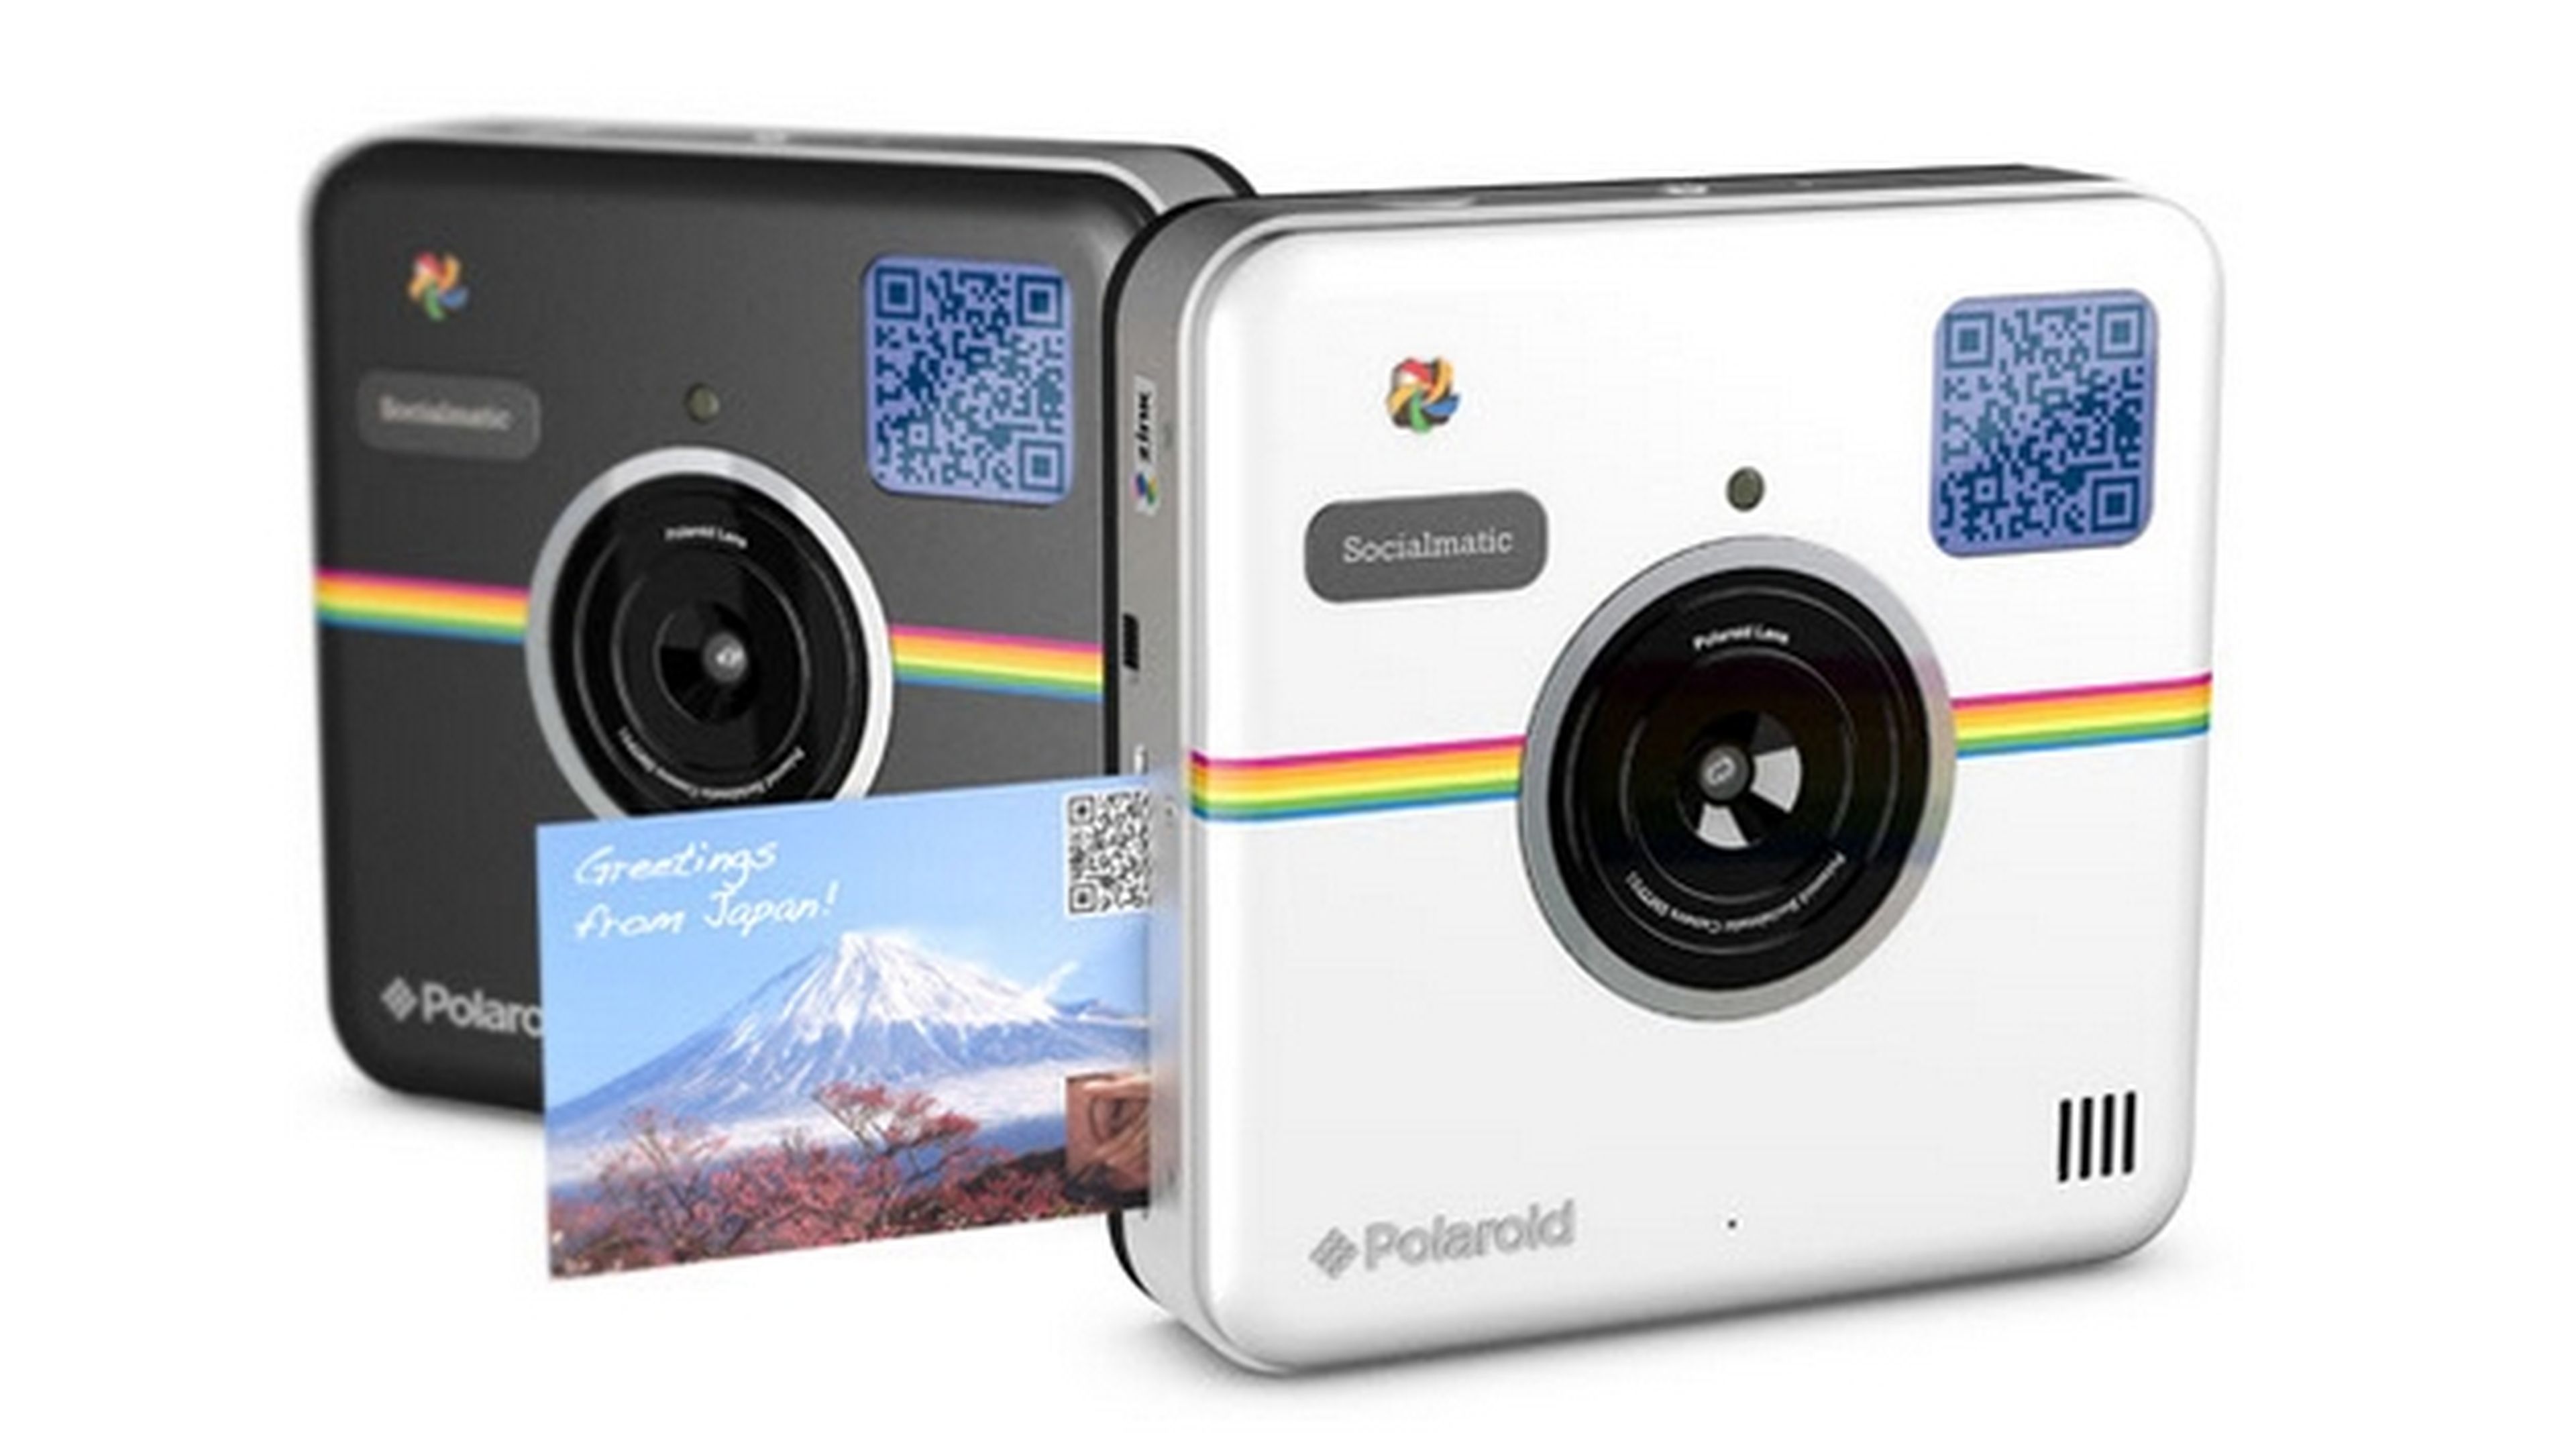 Transformador cangrejo María Polaroid Socialmatic, cámara estilo Instagram, imprime fotos | Computer Hoy